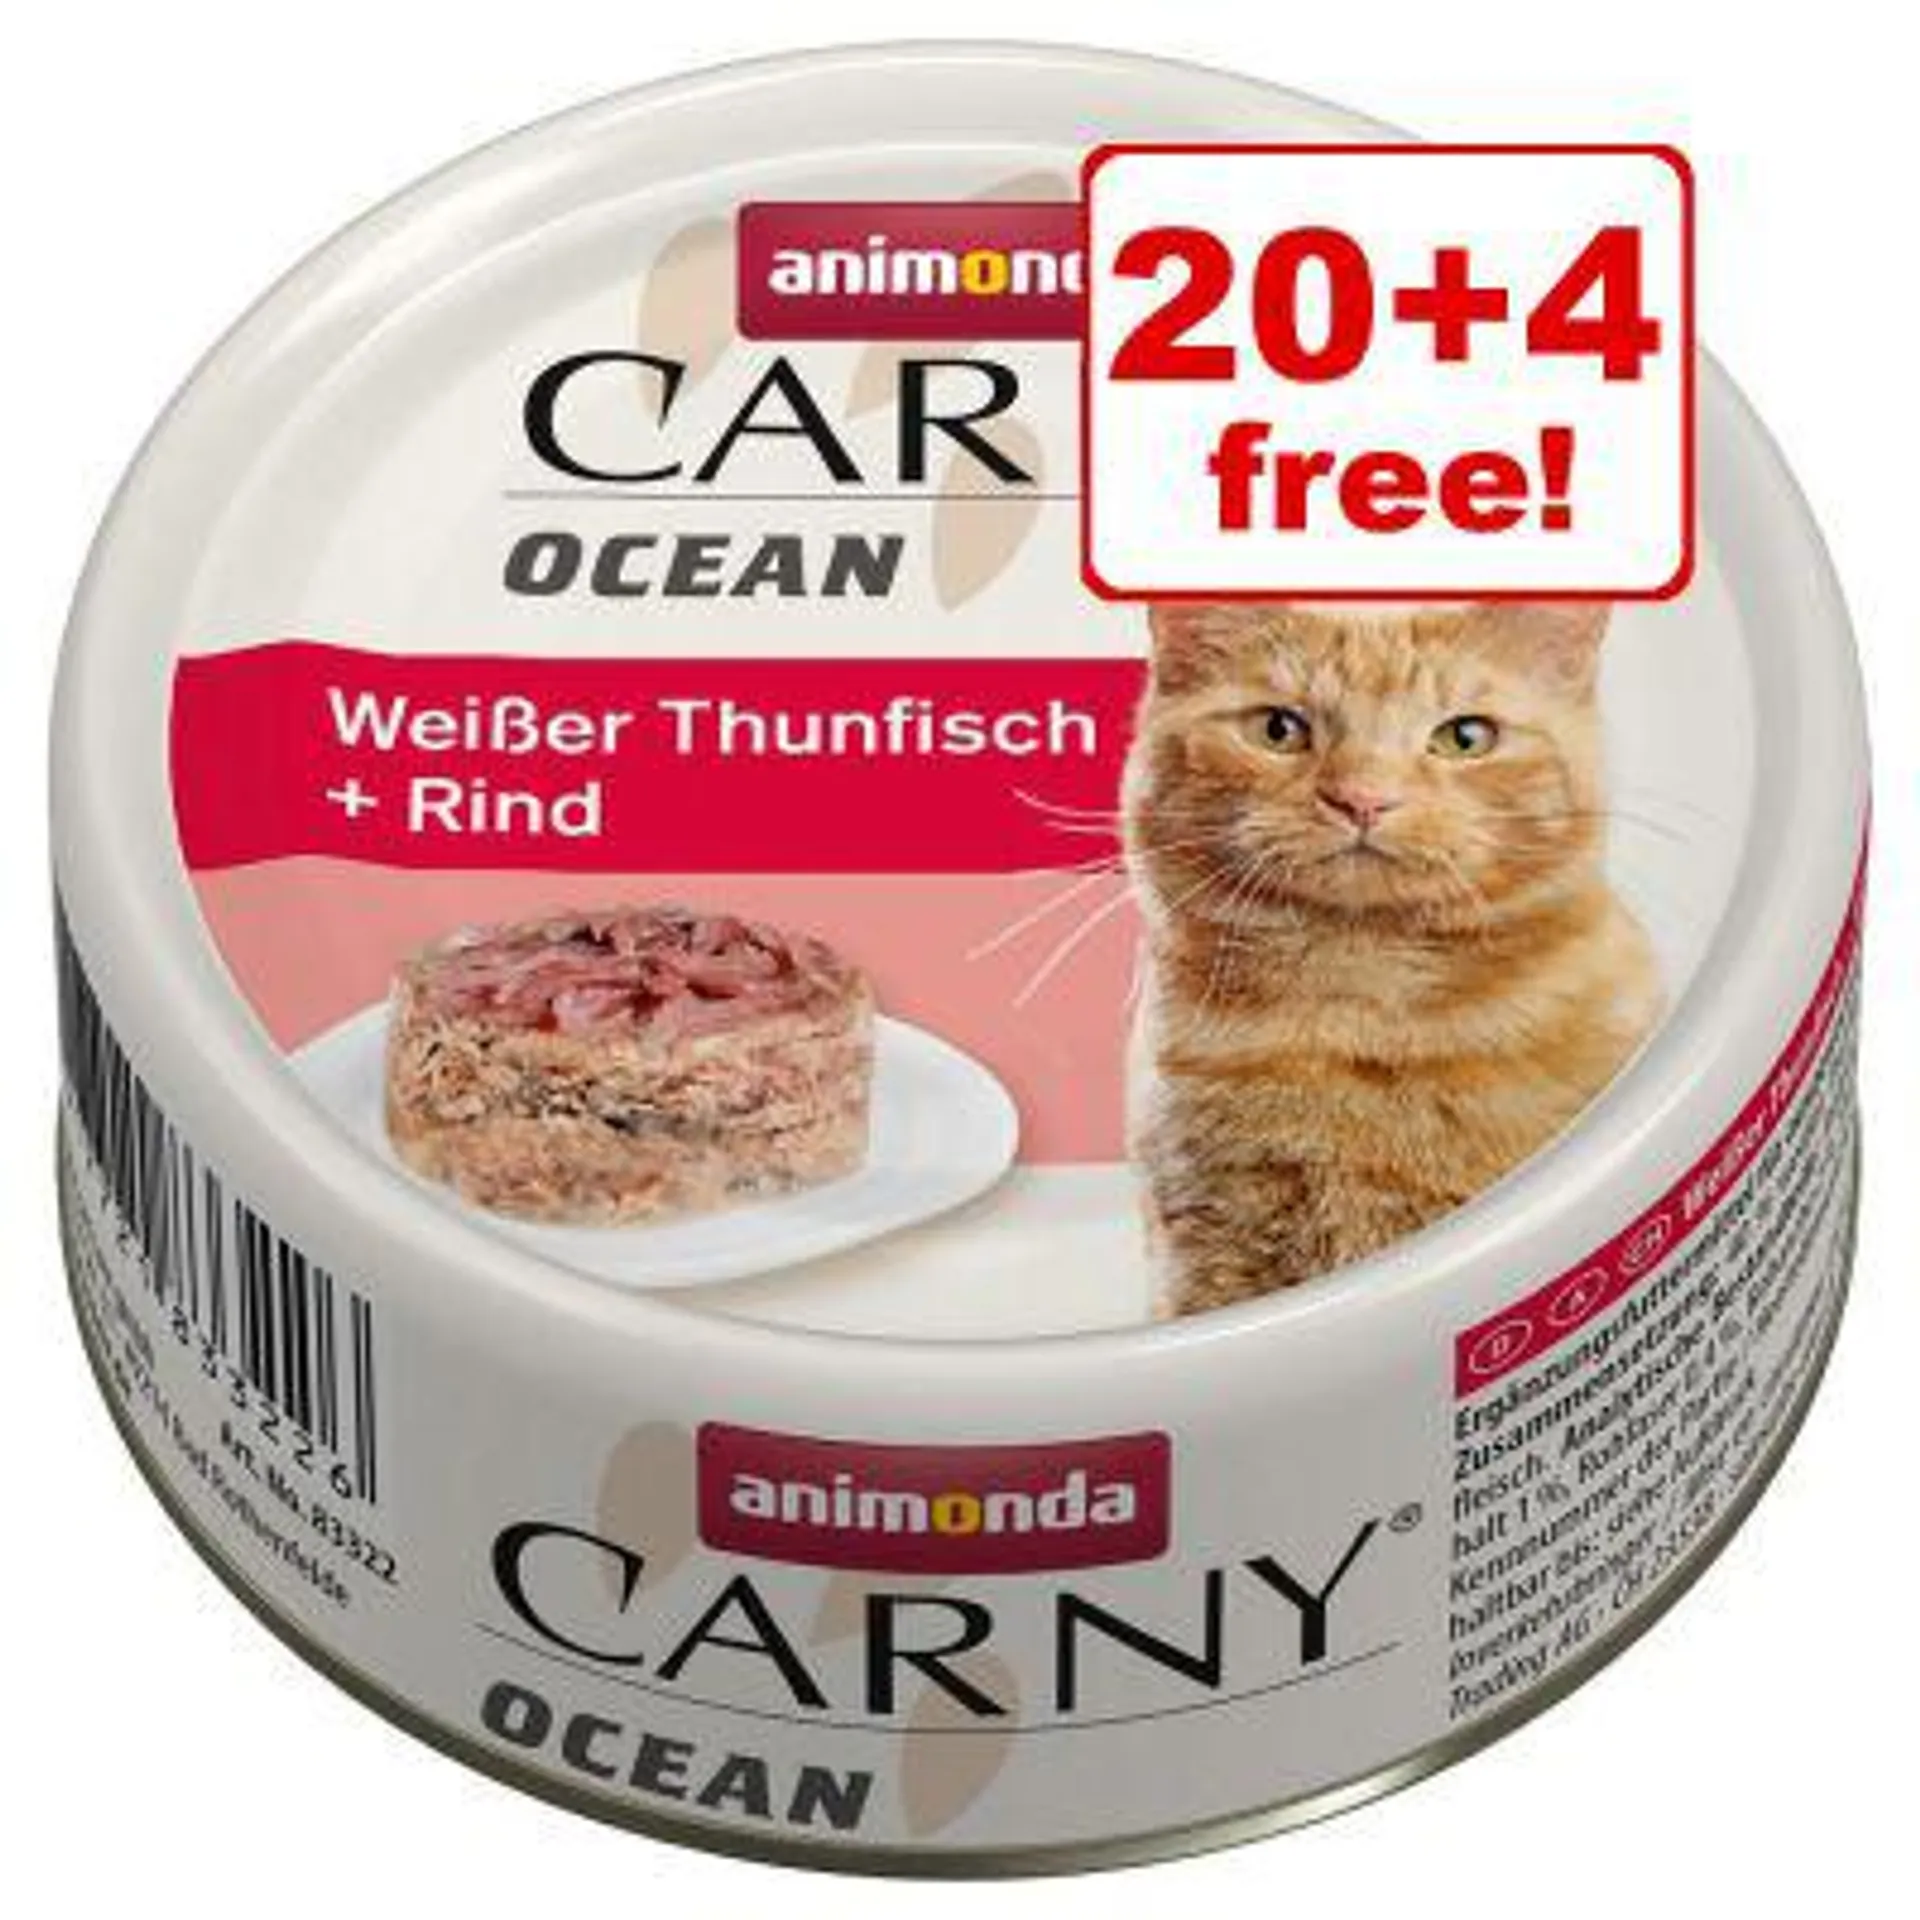 24 x 80g Animonda Carny Ocean Wet Cat Food - 20 + 4 Free!*